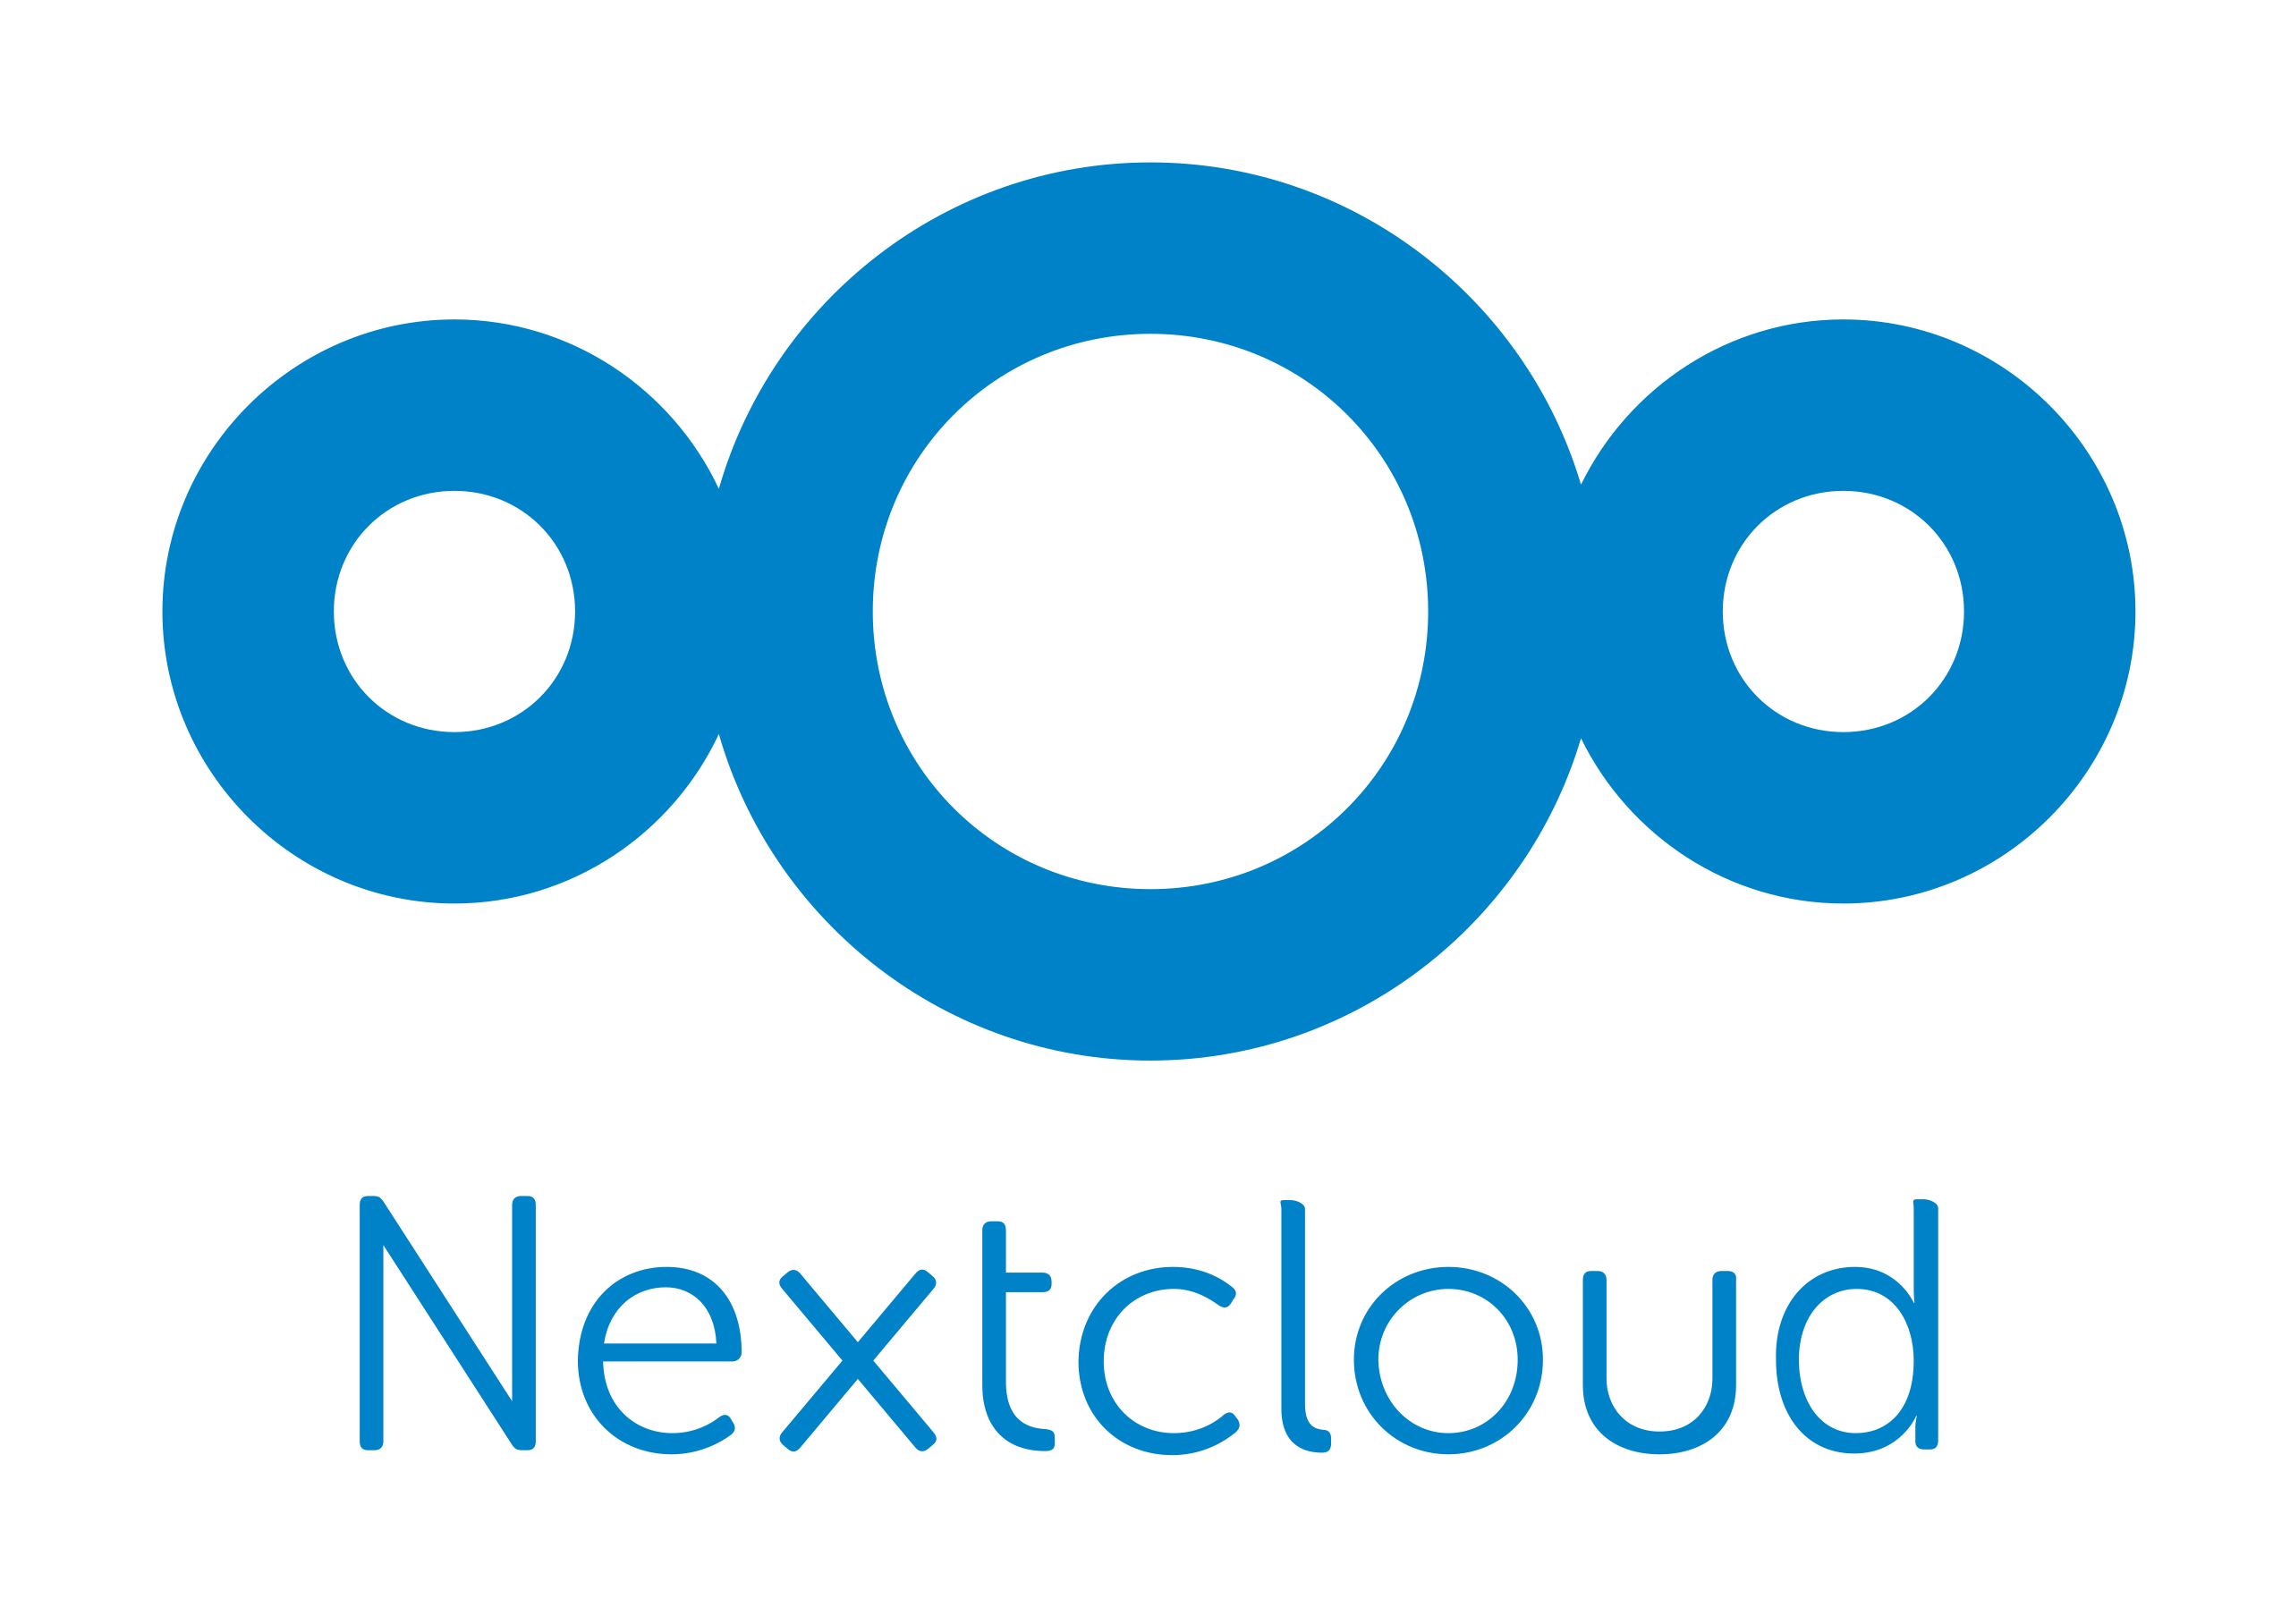 Nextcloud logotype